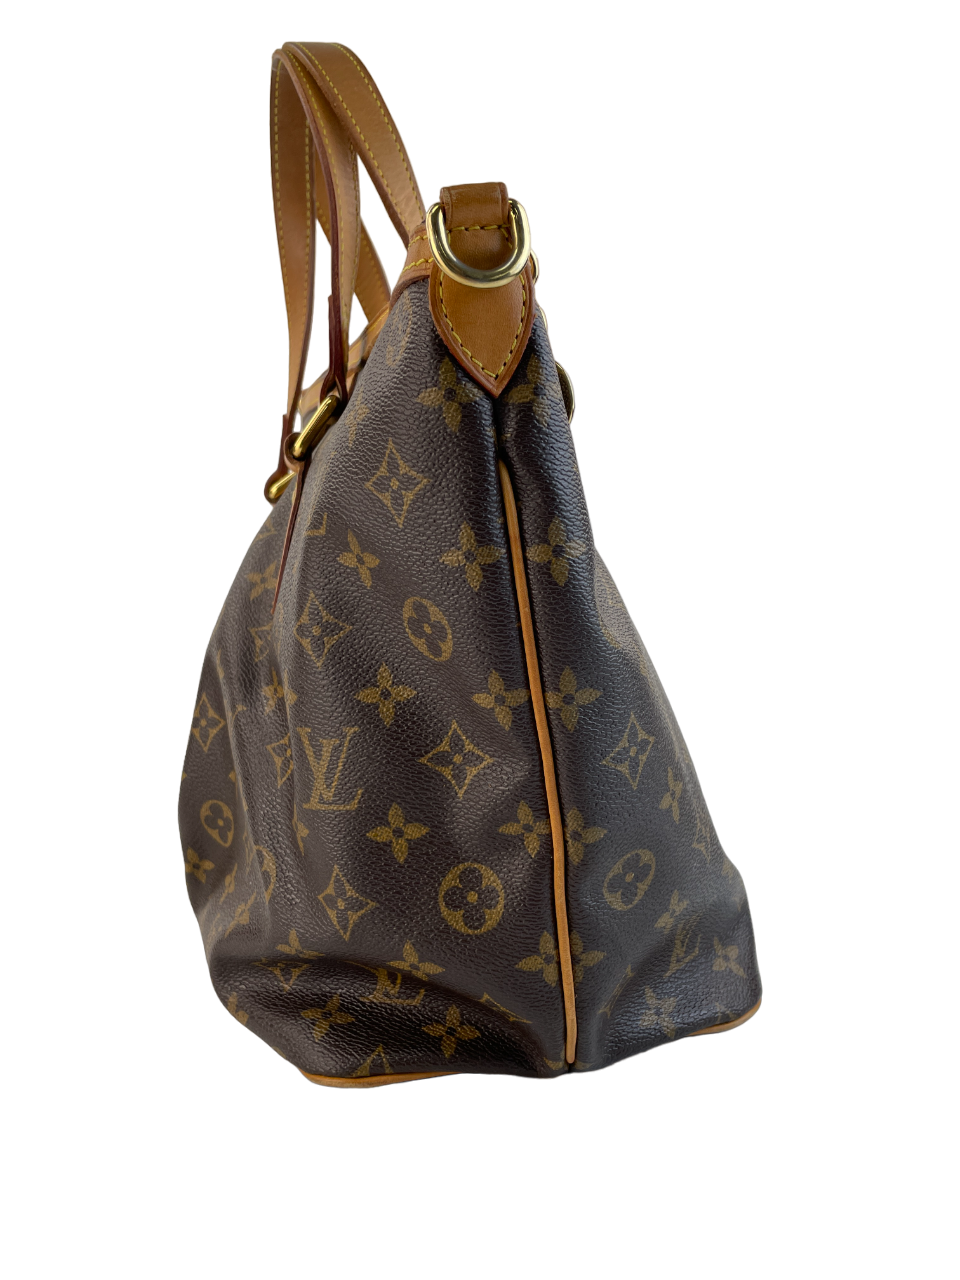 Preloved Louis Vuitton Palermo PM Bag SR0141 032923 - $300 OFF FLASH S –  KimmieBBags LLC